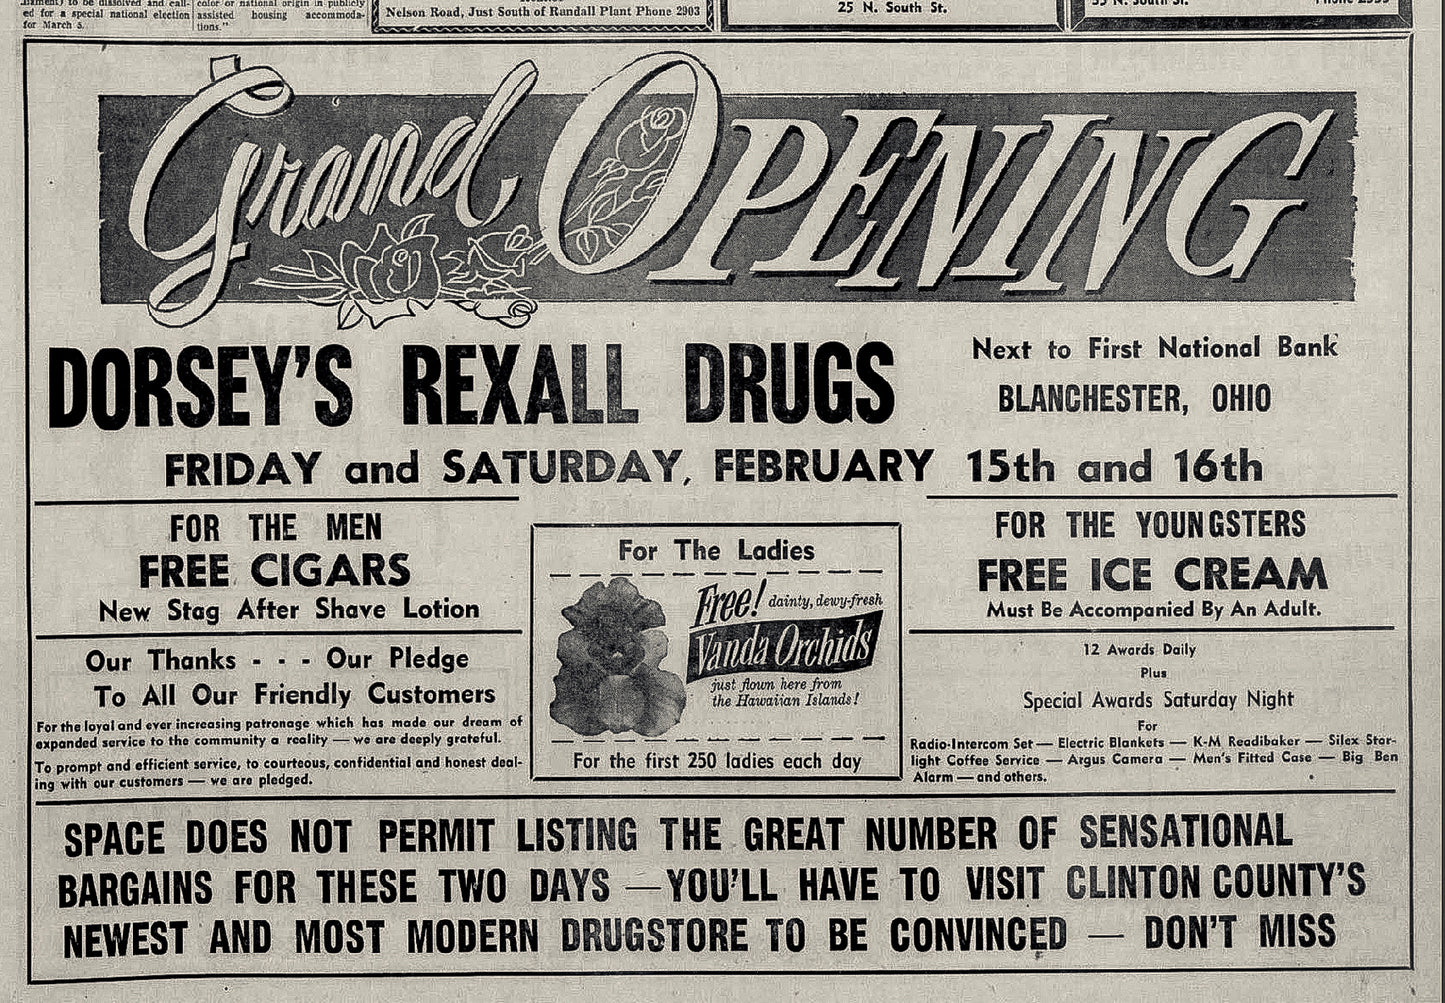 1957. Dorsey's Rexall Drugs Grand Opening Ad.